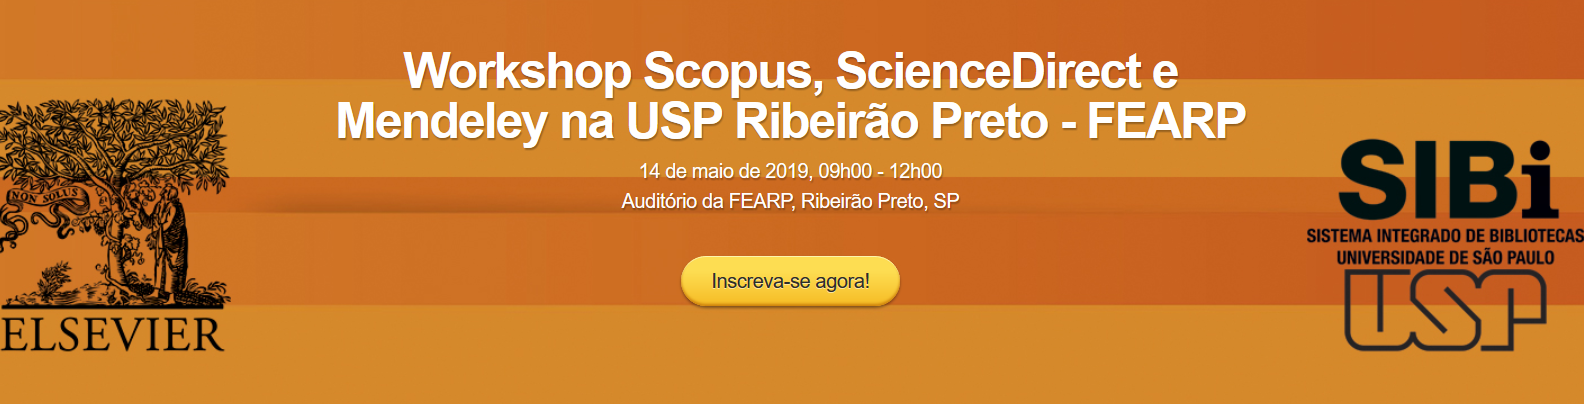 Screenshot 2019 05 07 Workshop Scopus ScienceDirect e Mendeley na USP Ribeirão Preto FEARP